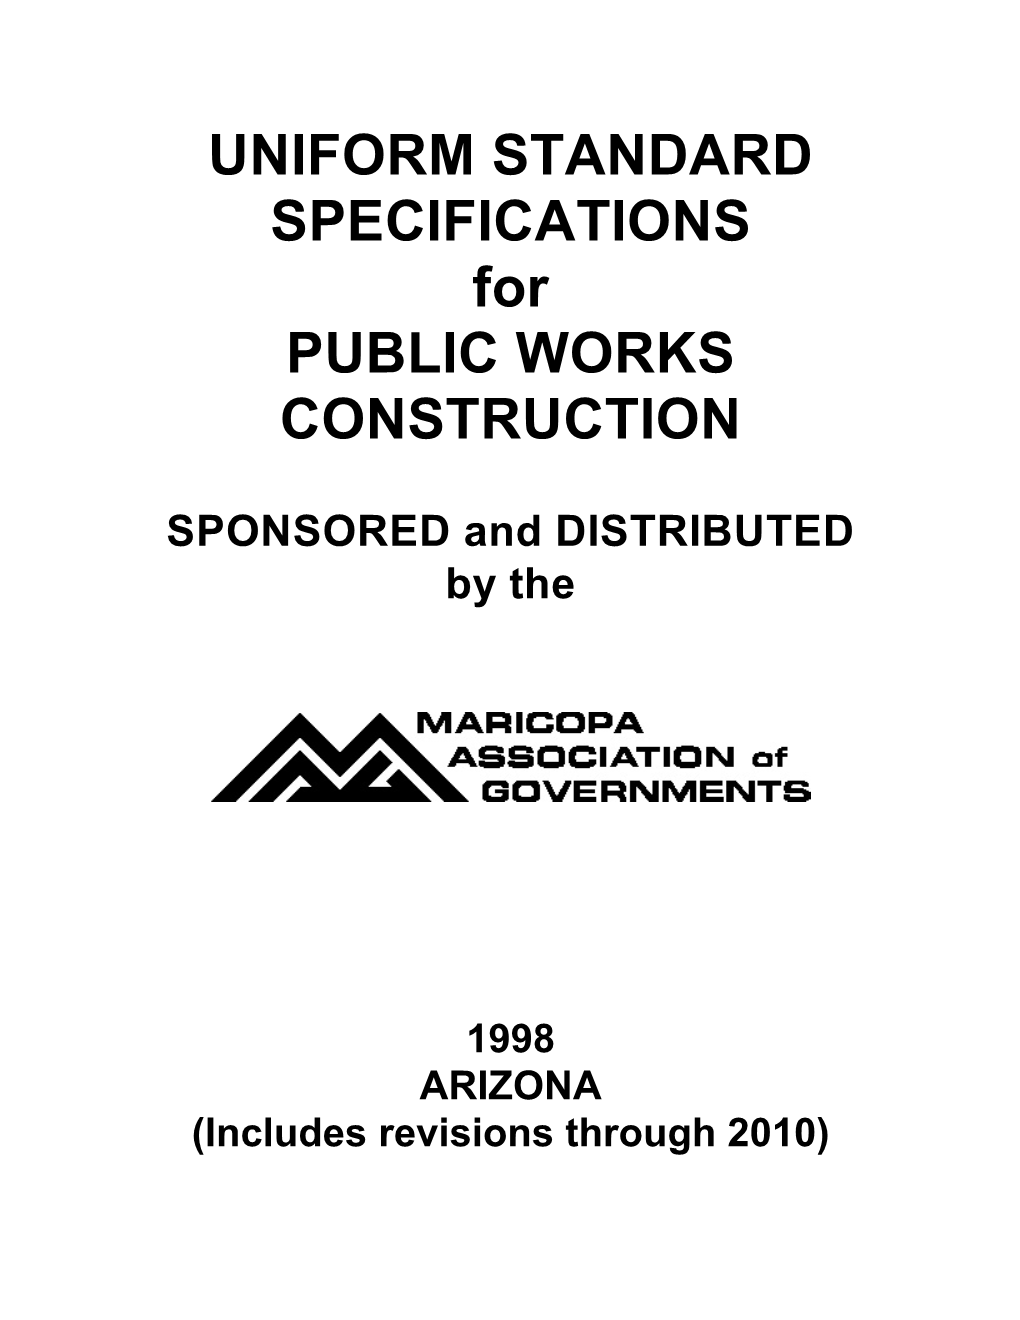 UNIFORM STANDARD SPECIFICATIONS for PUBLIC WORKS CONSTRUCTION